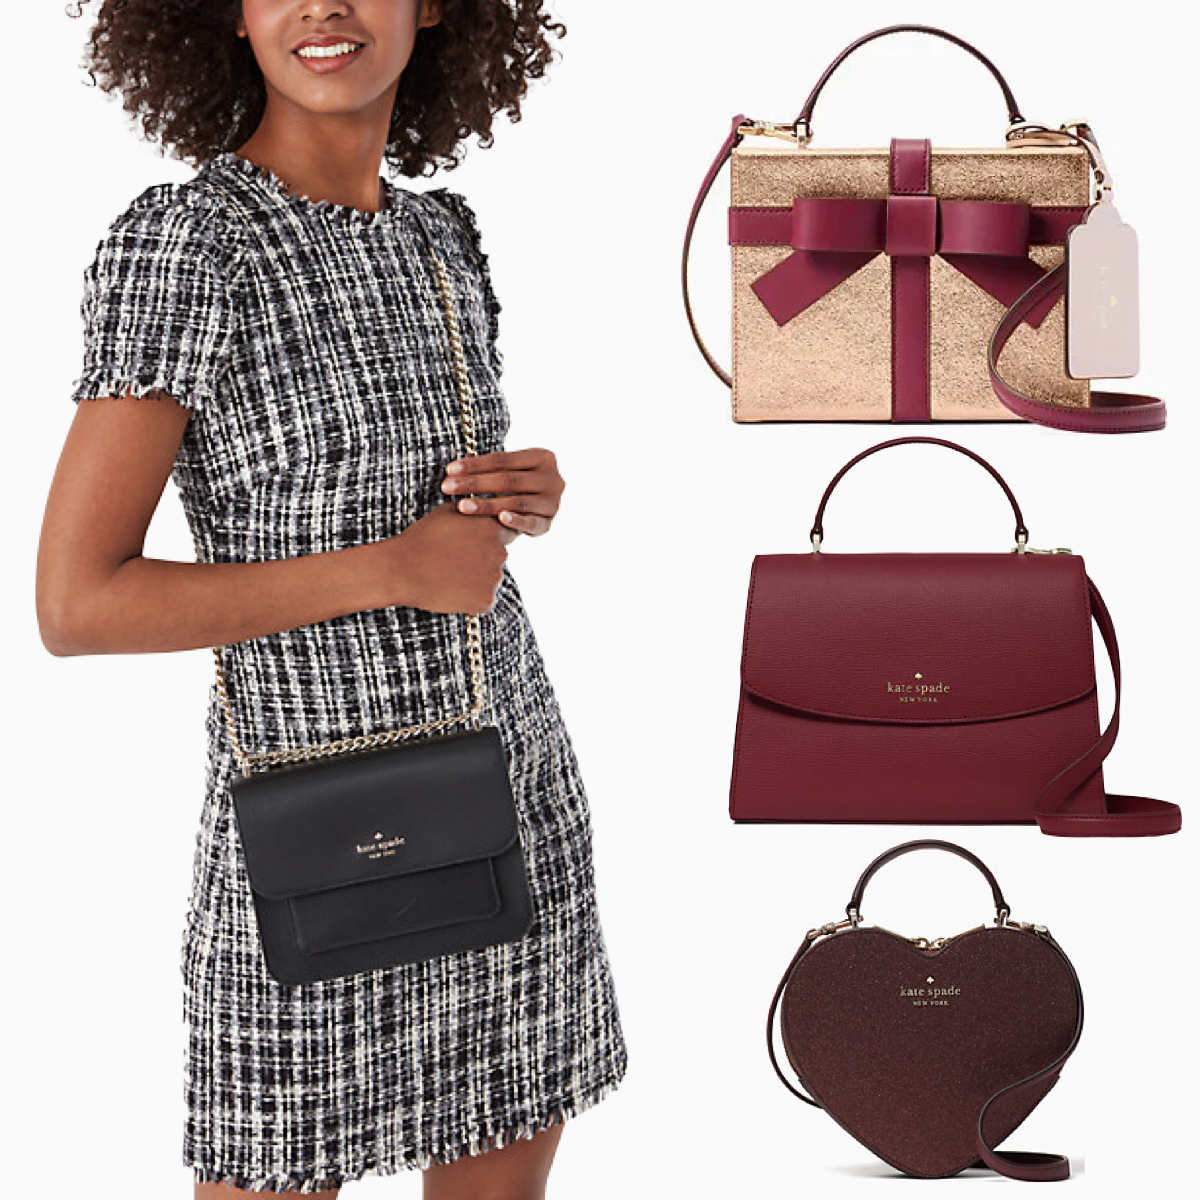  kate spade handbag for women Brynn tote, black : Clothing,  Shoes & Jewelry